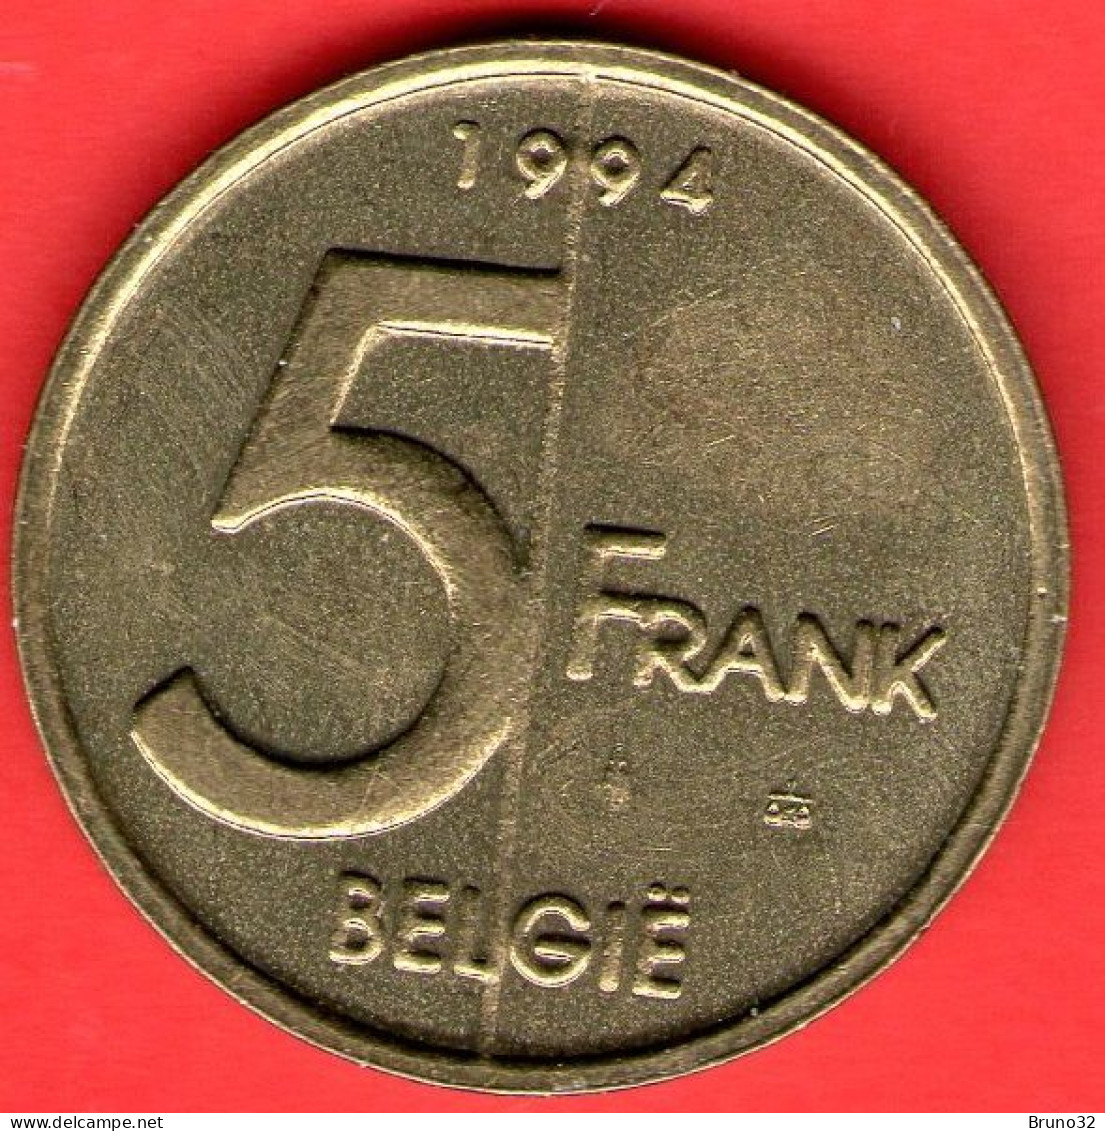 Belgio - Belgium - Belgique - Belgie - 1994 - 5 Franchi - QFDC/aUNC - Come Da Foto - 5 Francs